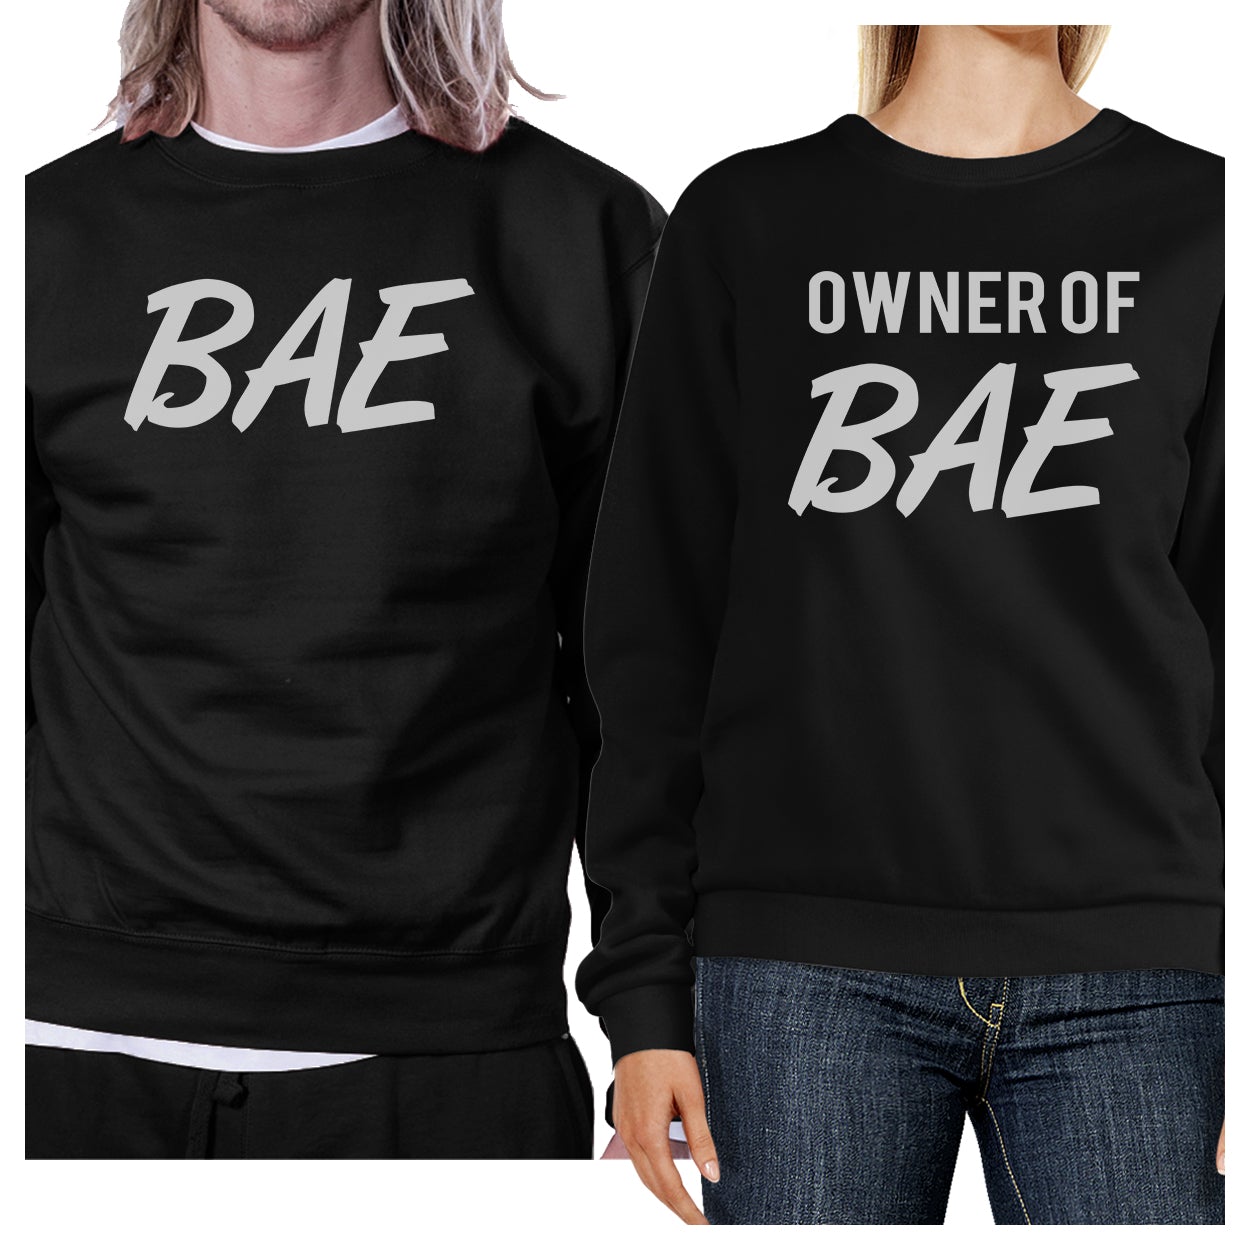 Bae And Owner Of Bae Matching Couple Black Sweatshirts